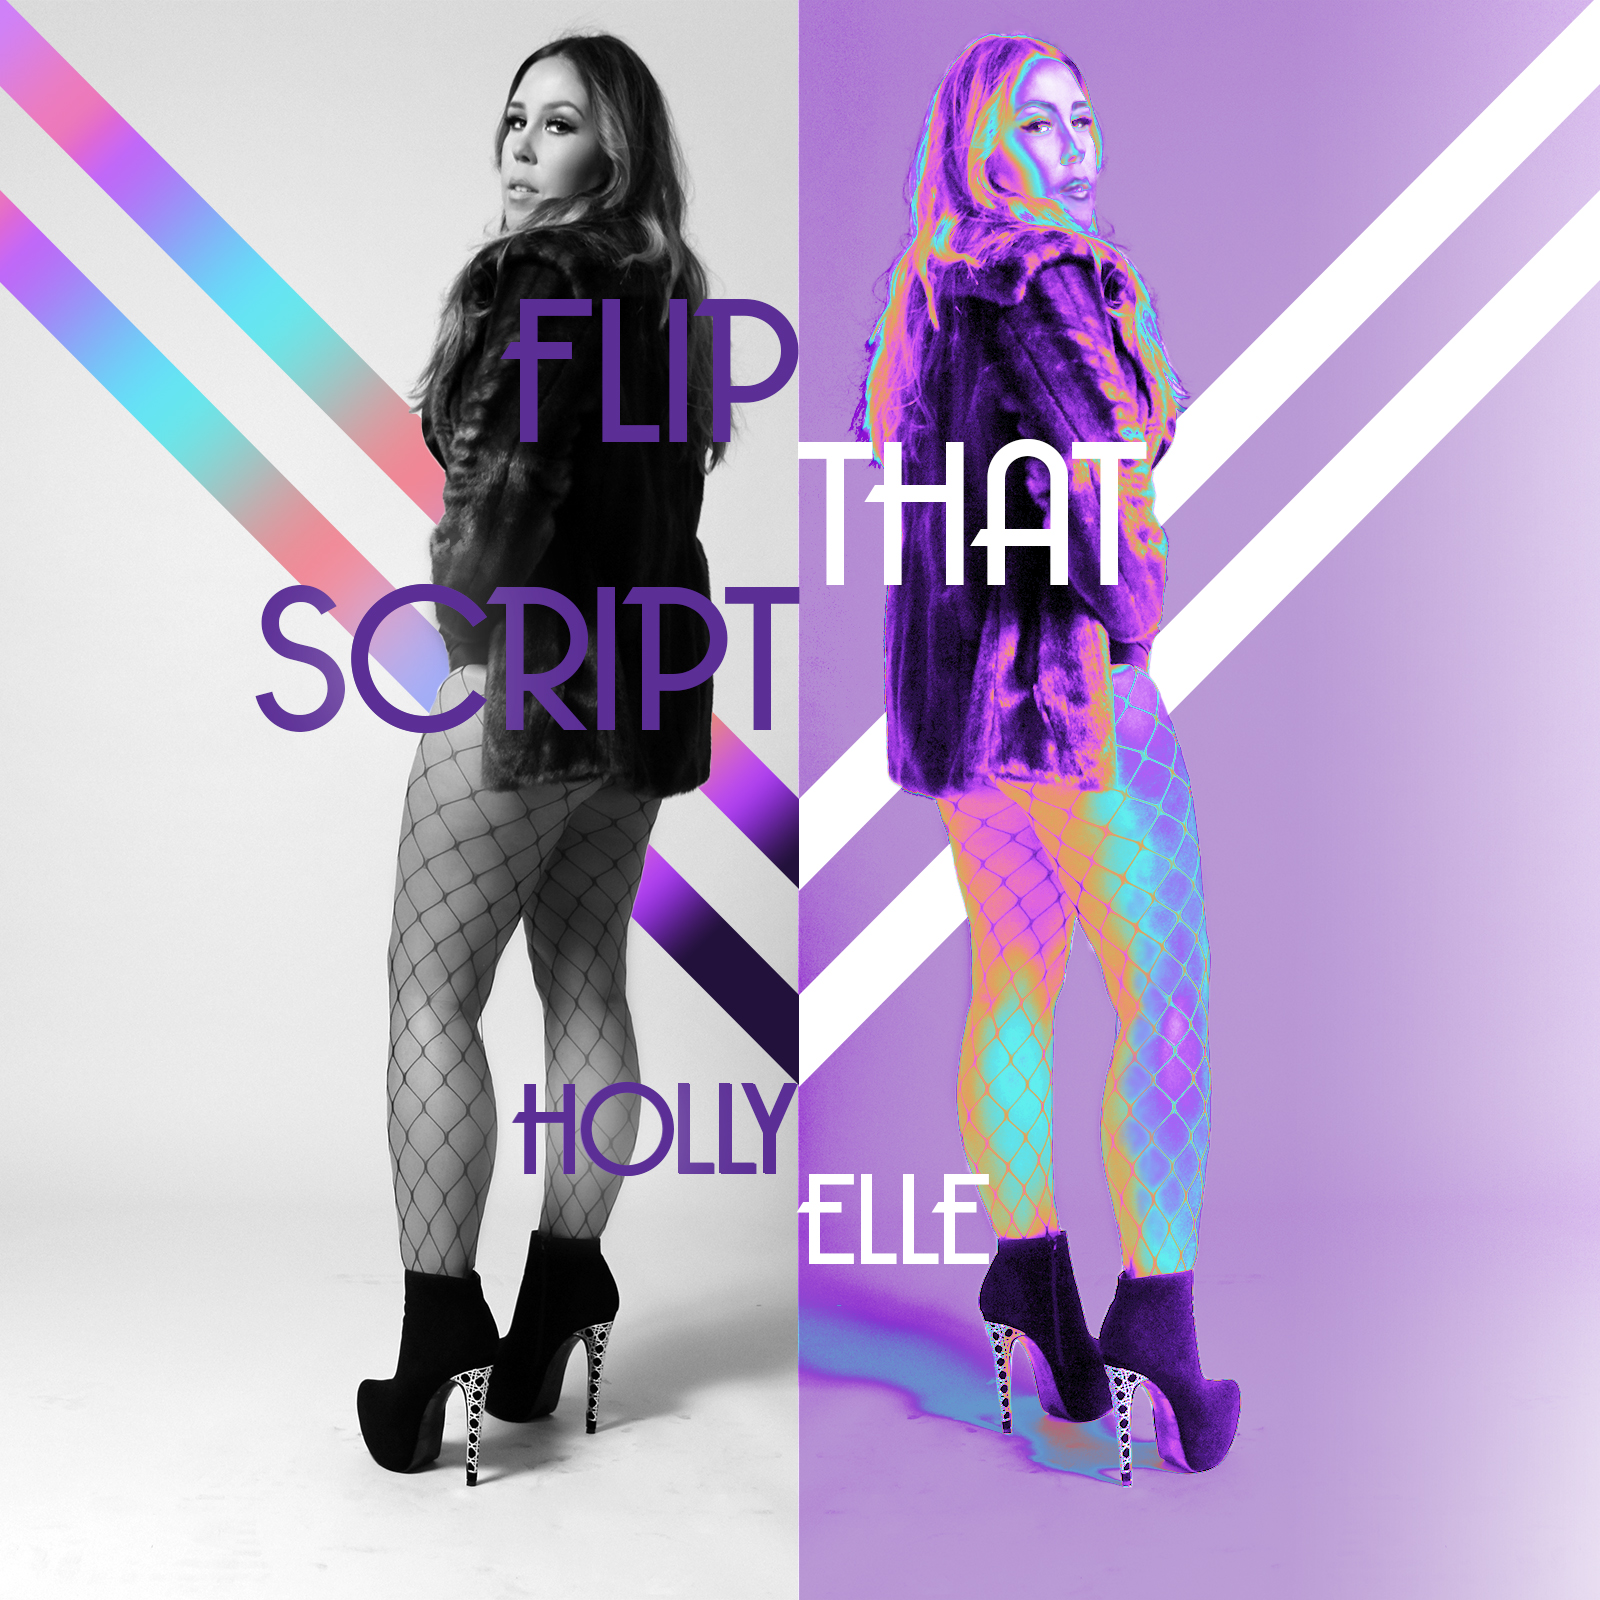 Holly Elle “Flip That Script”